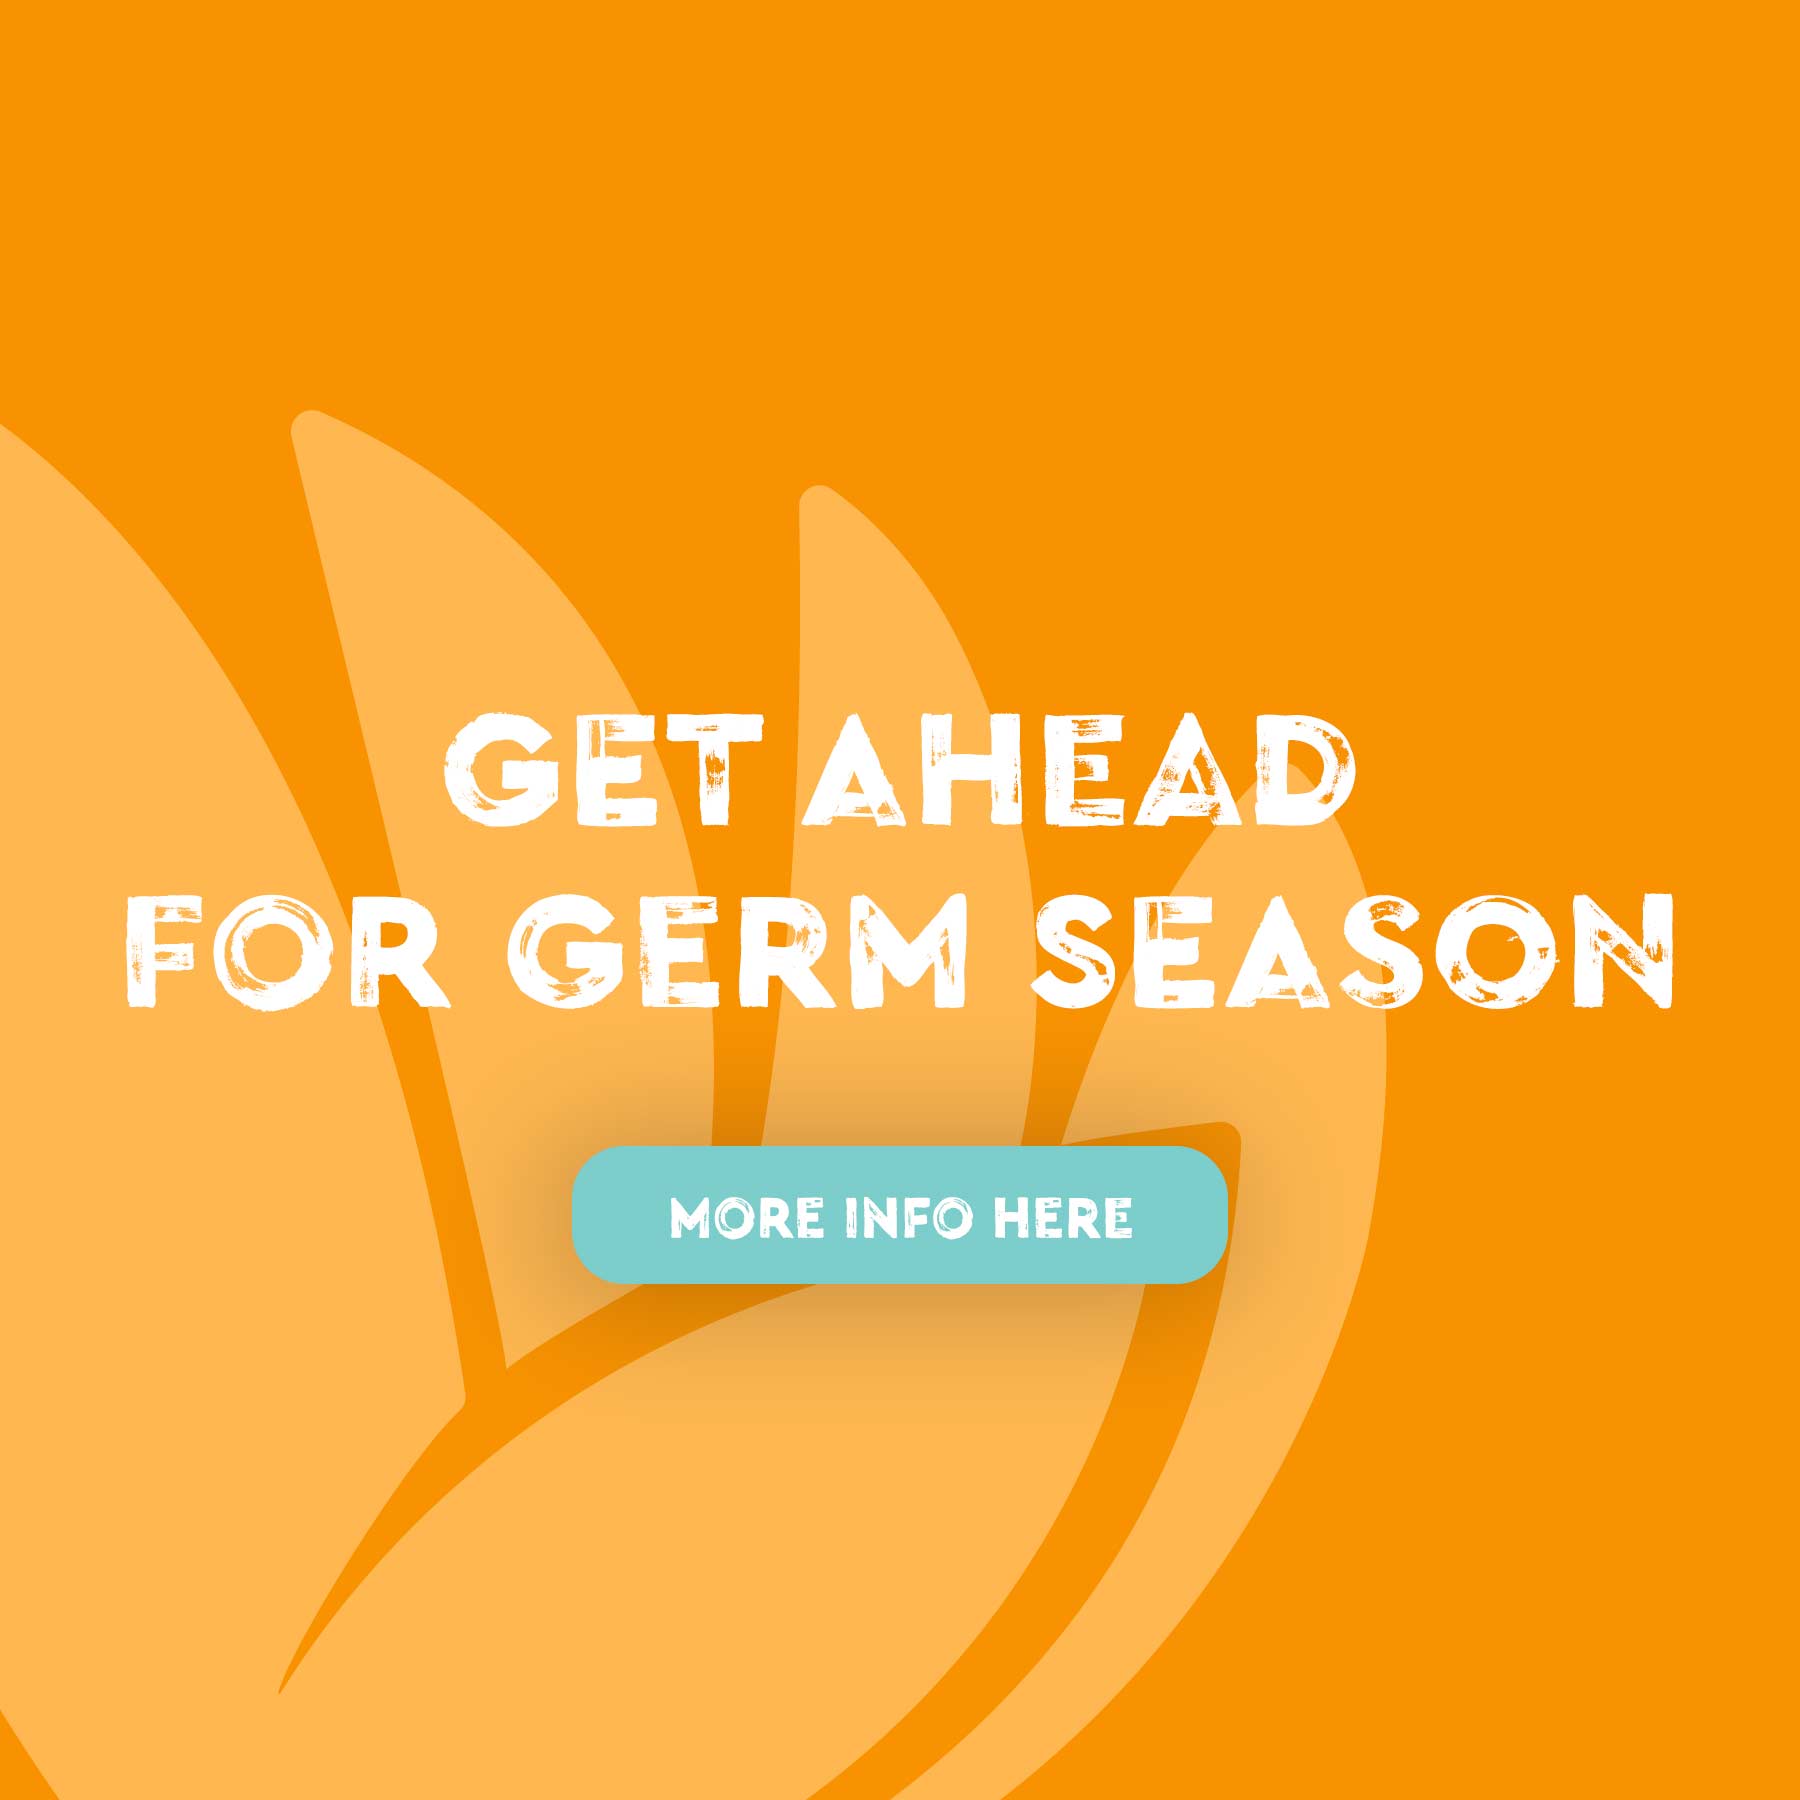 Get ahead this germ season.